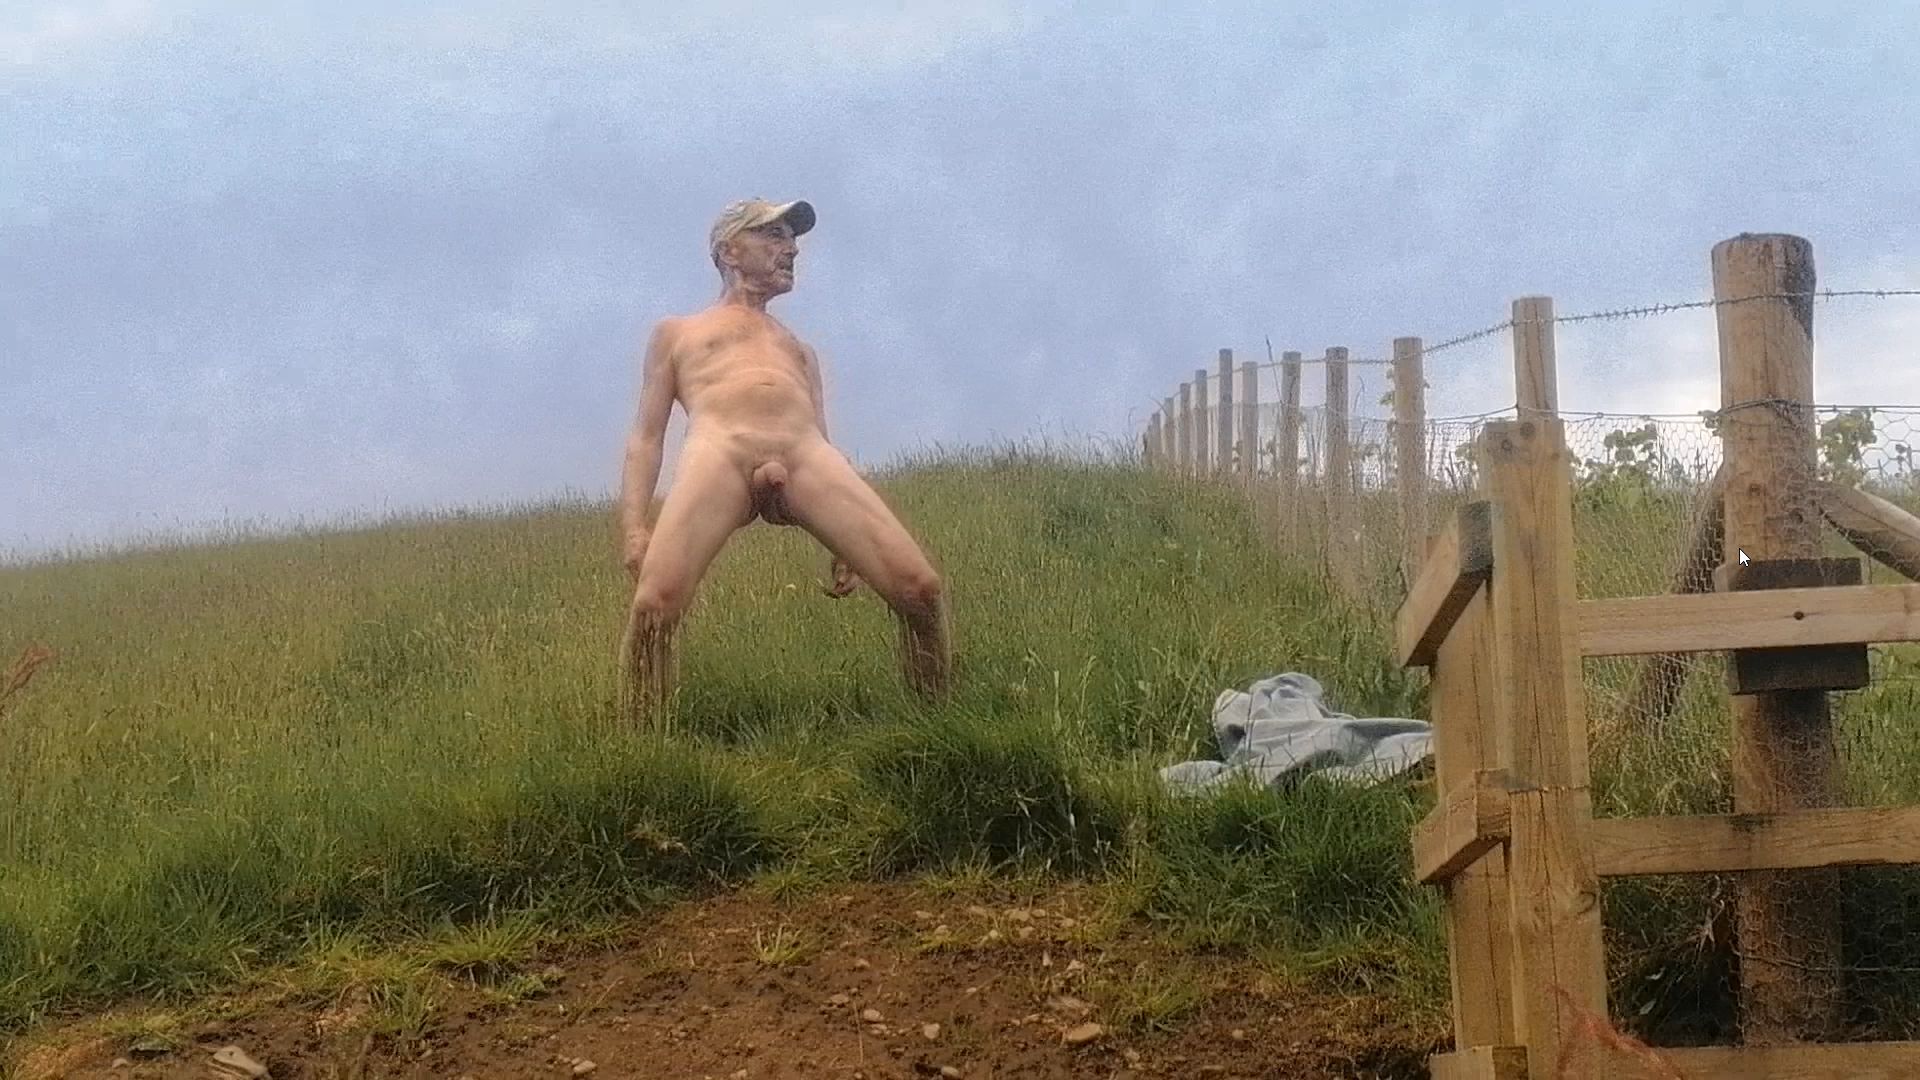 Male Nude in Public Park